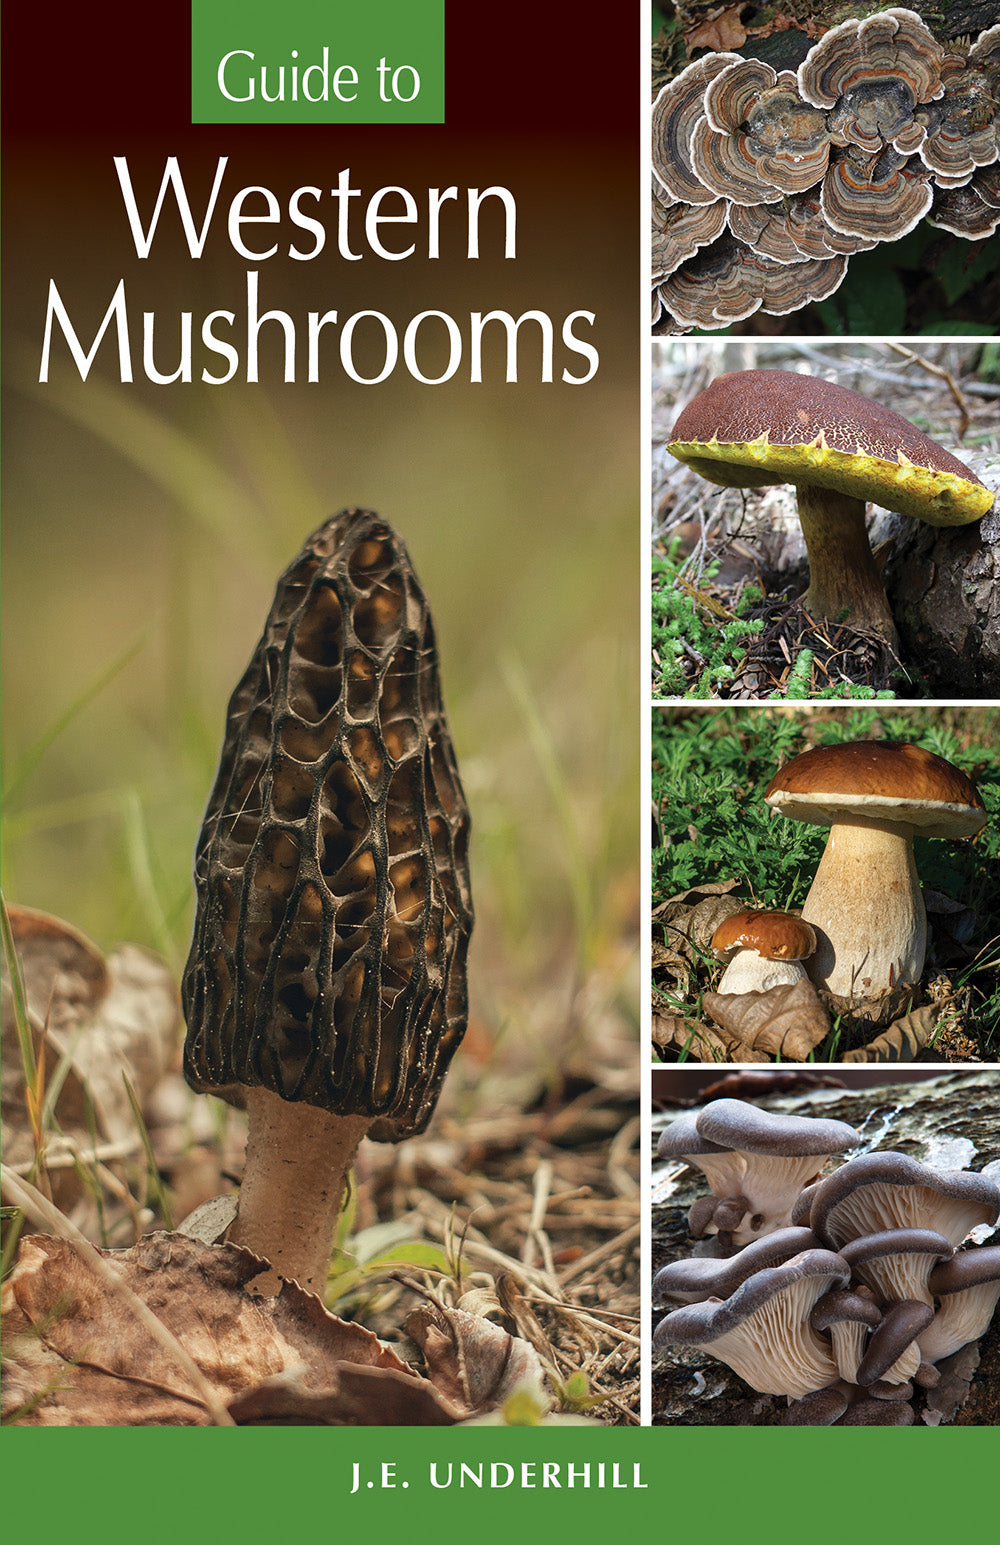 Guide to Western Mushrooms